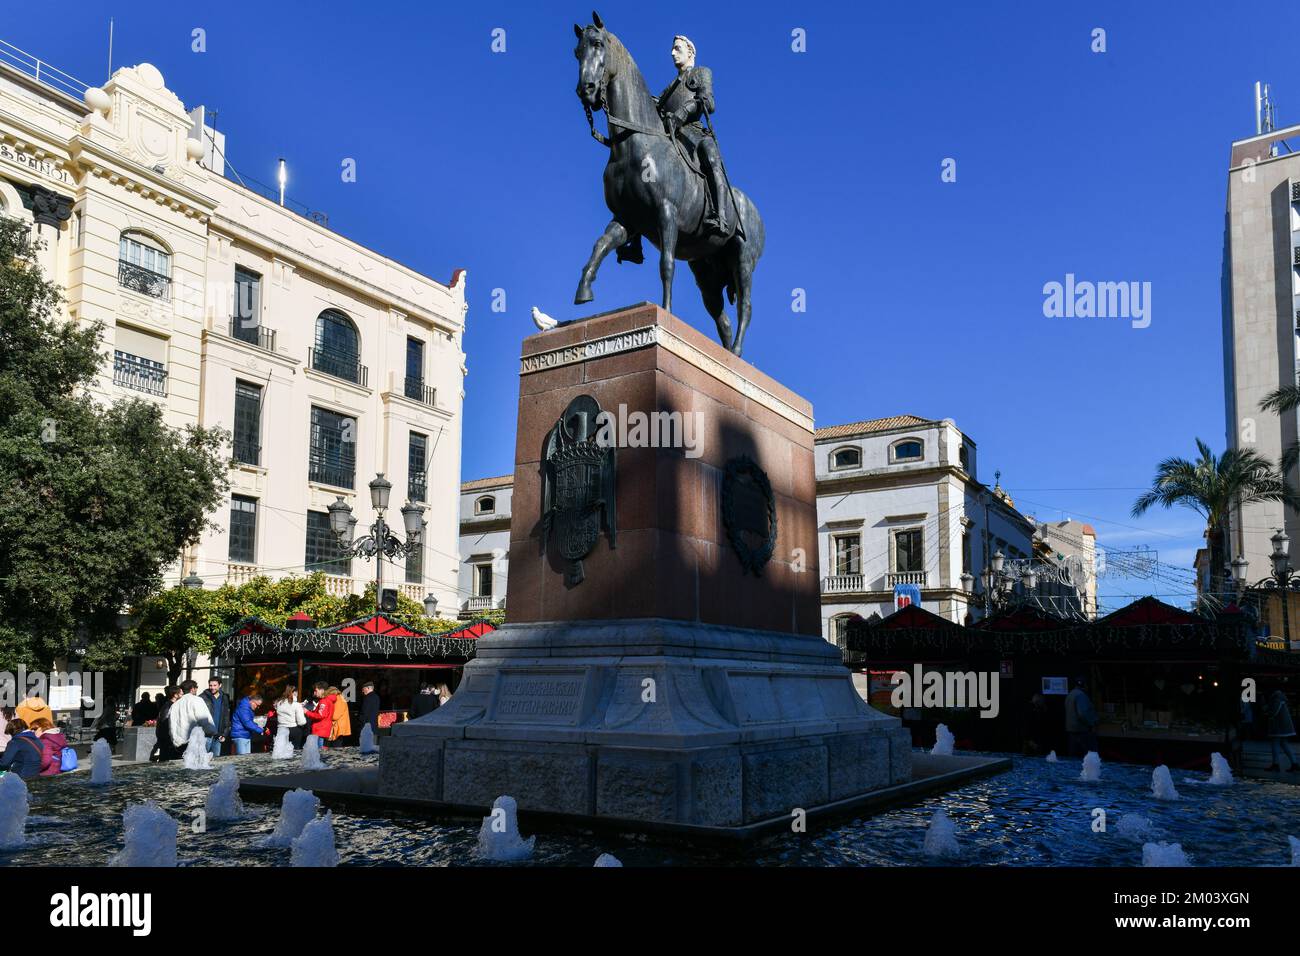 Cordoba, Spain - Nov 28, 2021: Tendillas Square at heart of Cordoba. Statue by Gonzalo Fernandez de Cordoba (1453-1515), known as 'Great Captain'. Cor Stock Photo